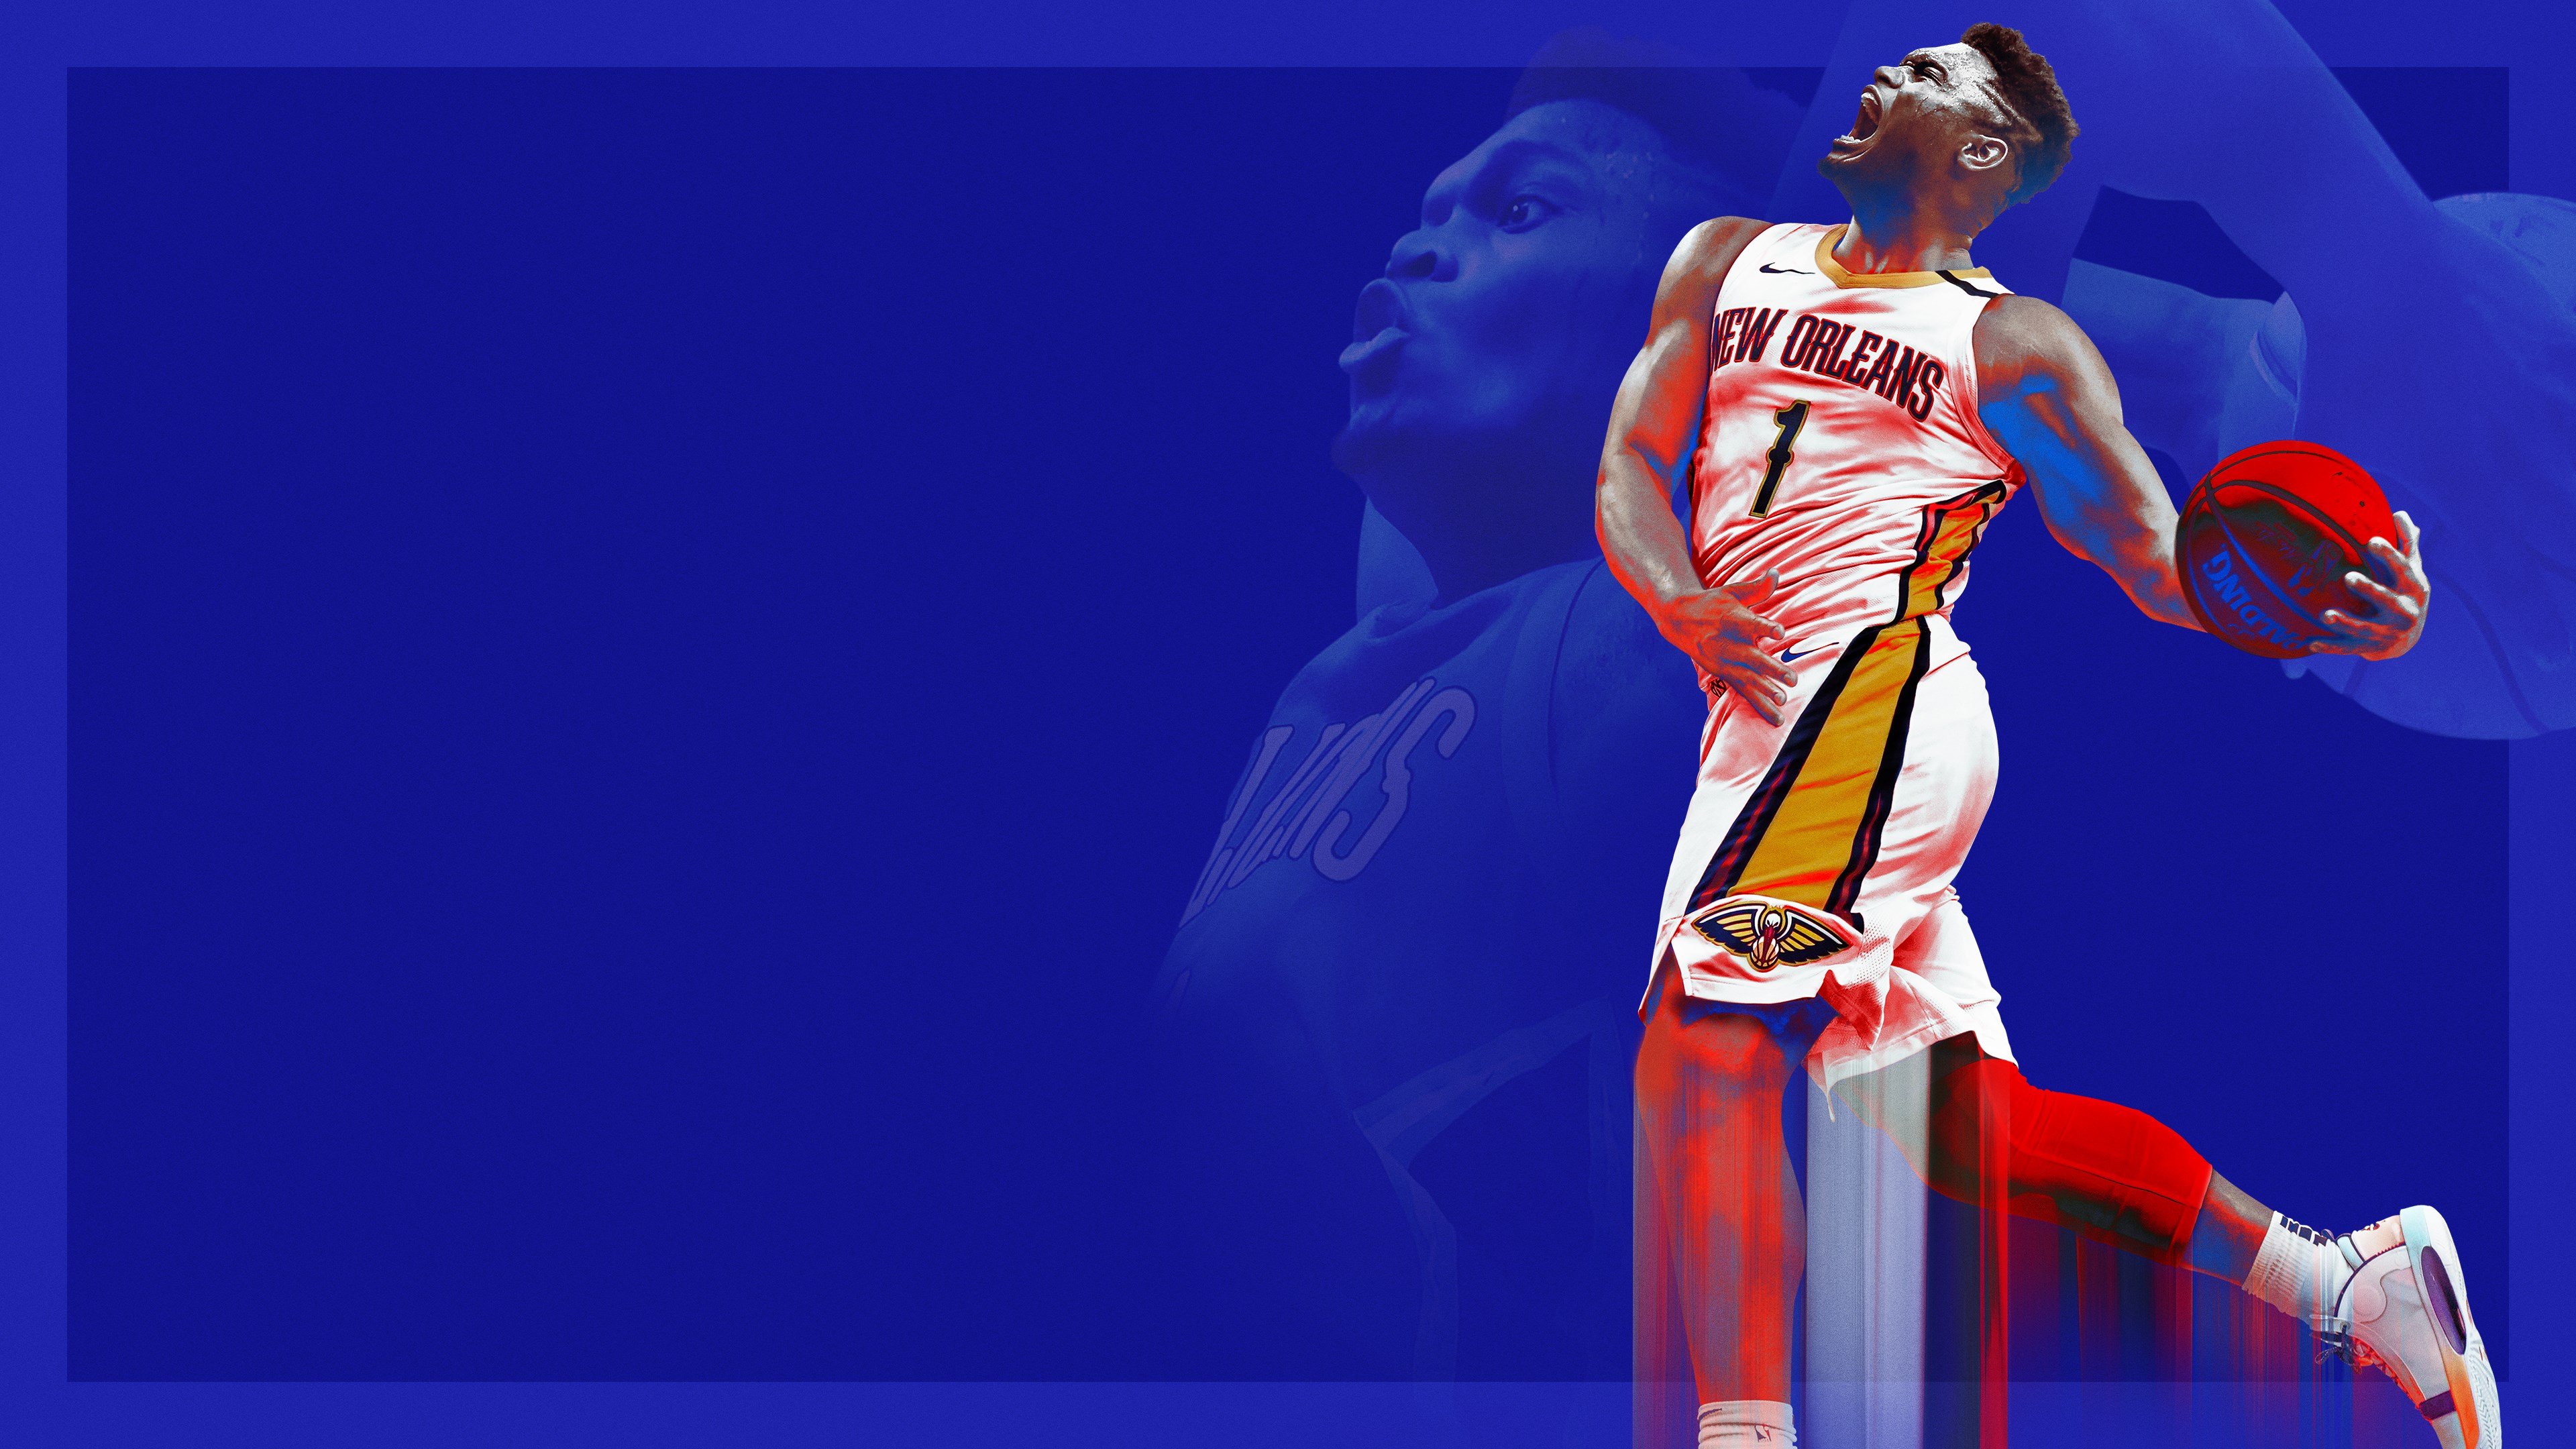 NBA 2K21 cover image